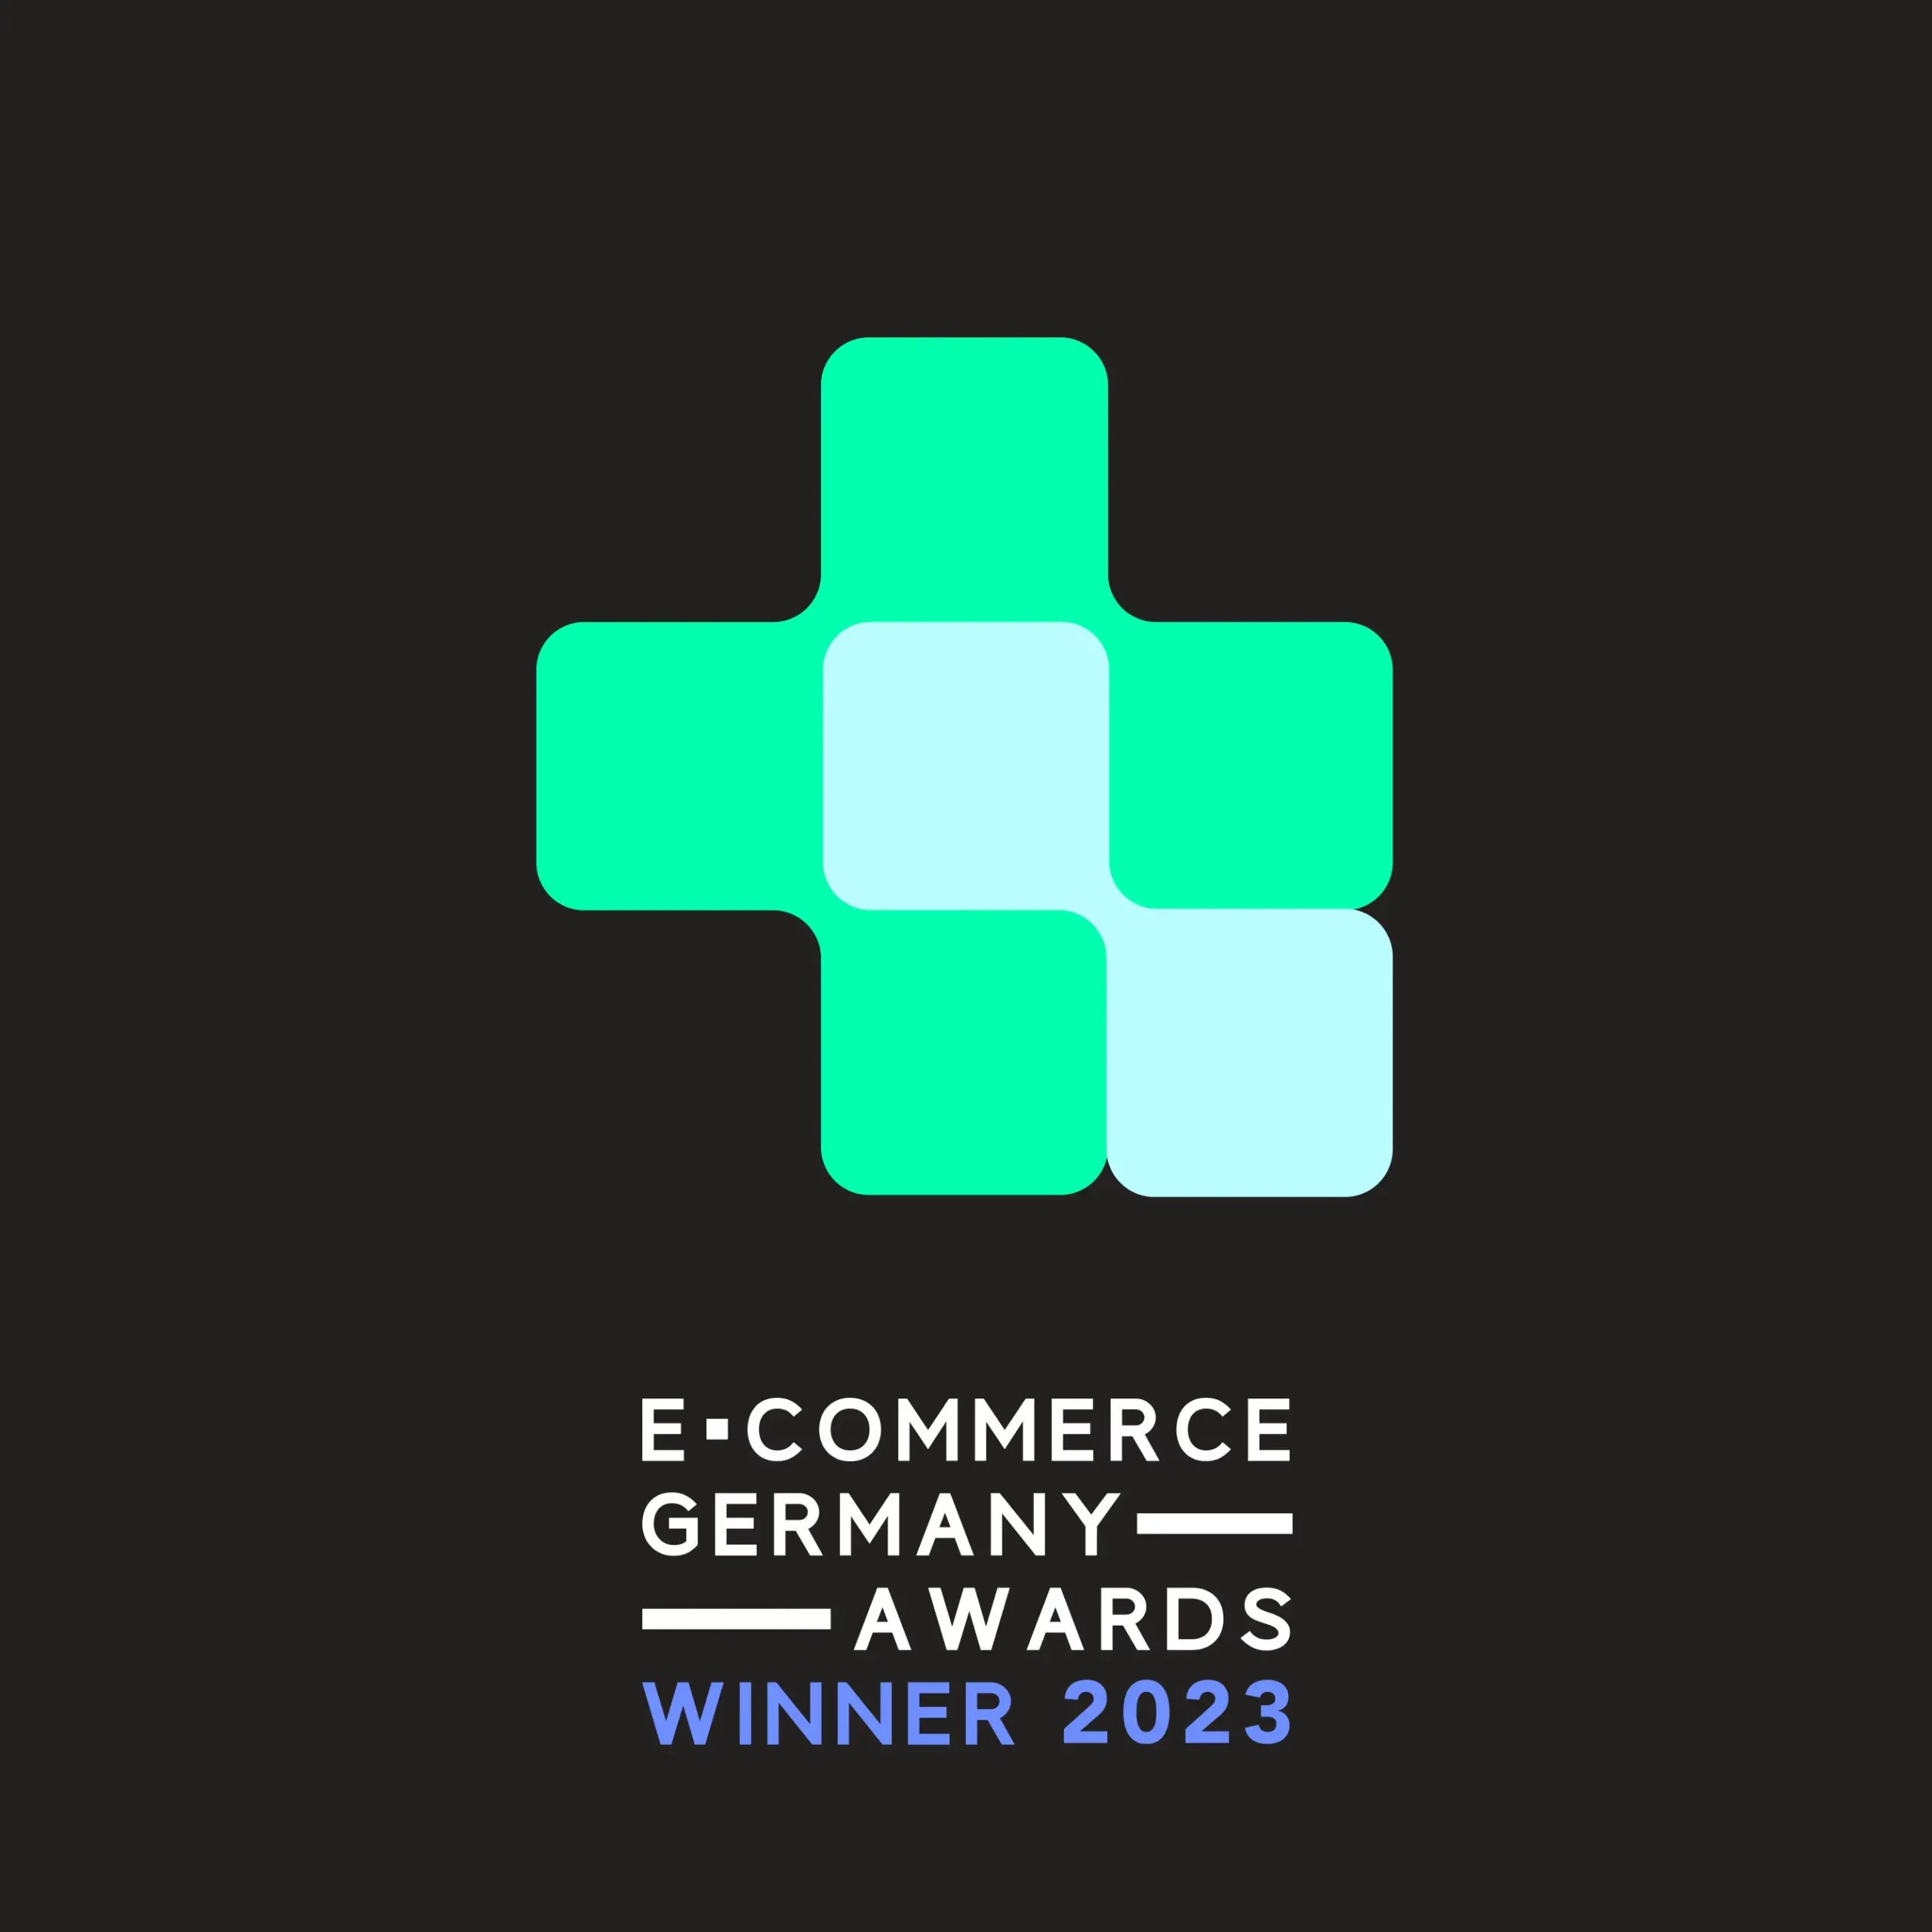 eCommerce fulfillment awards Germany EGA 2023 everstox